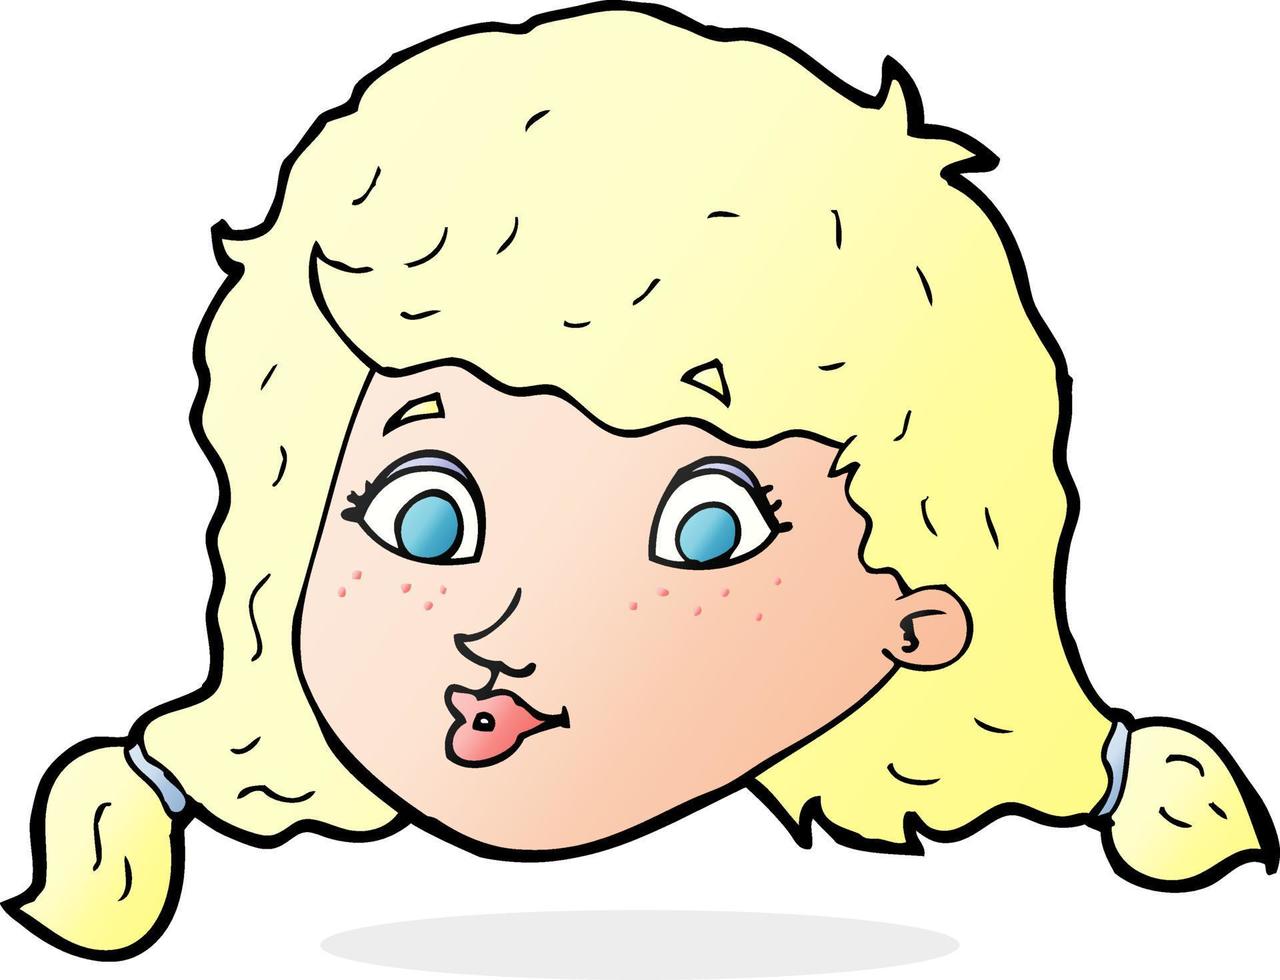 doodle character cartoon girl face vector